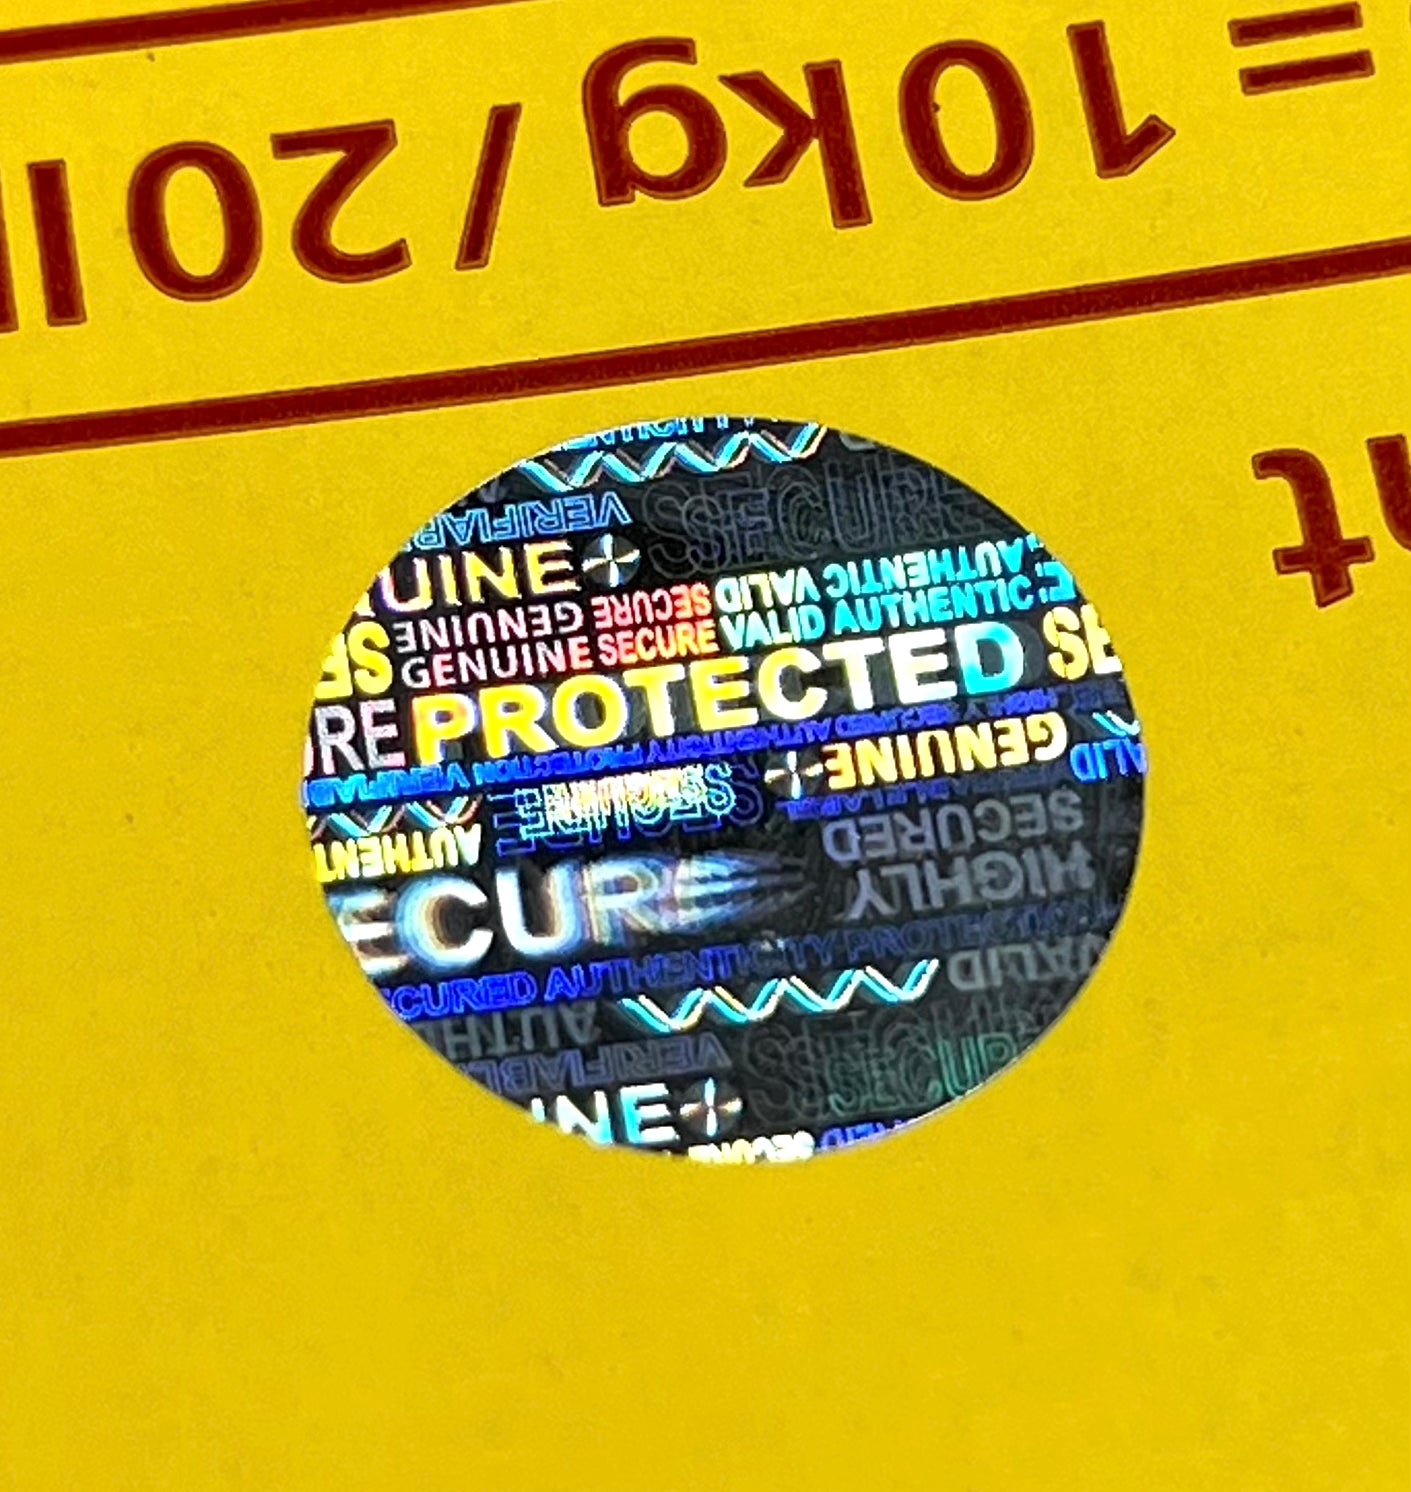 SH1020 "AUTHENTIC" Round Tamper Evident Security Hologram Sticker, Warranty Tamper Proof Holographic Labels